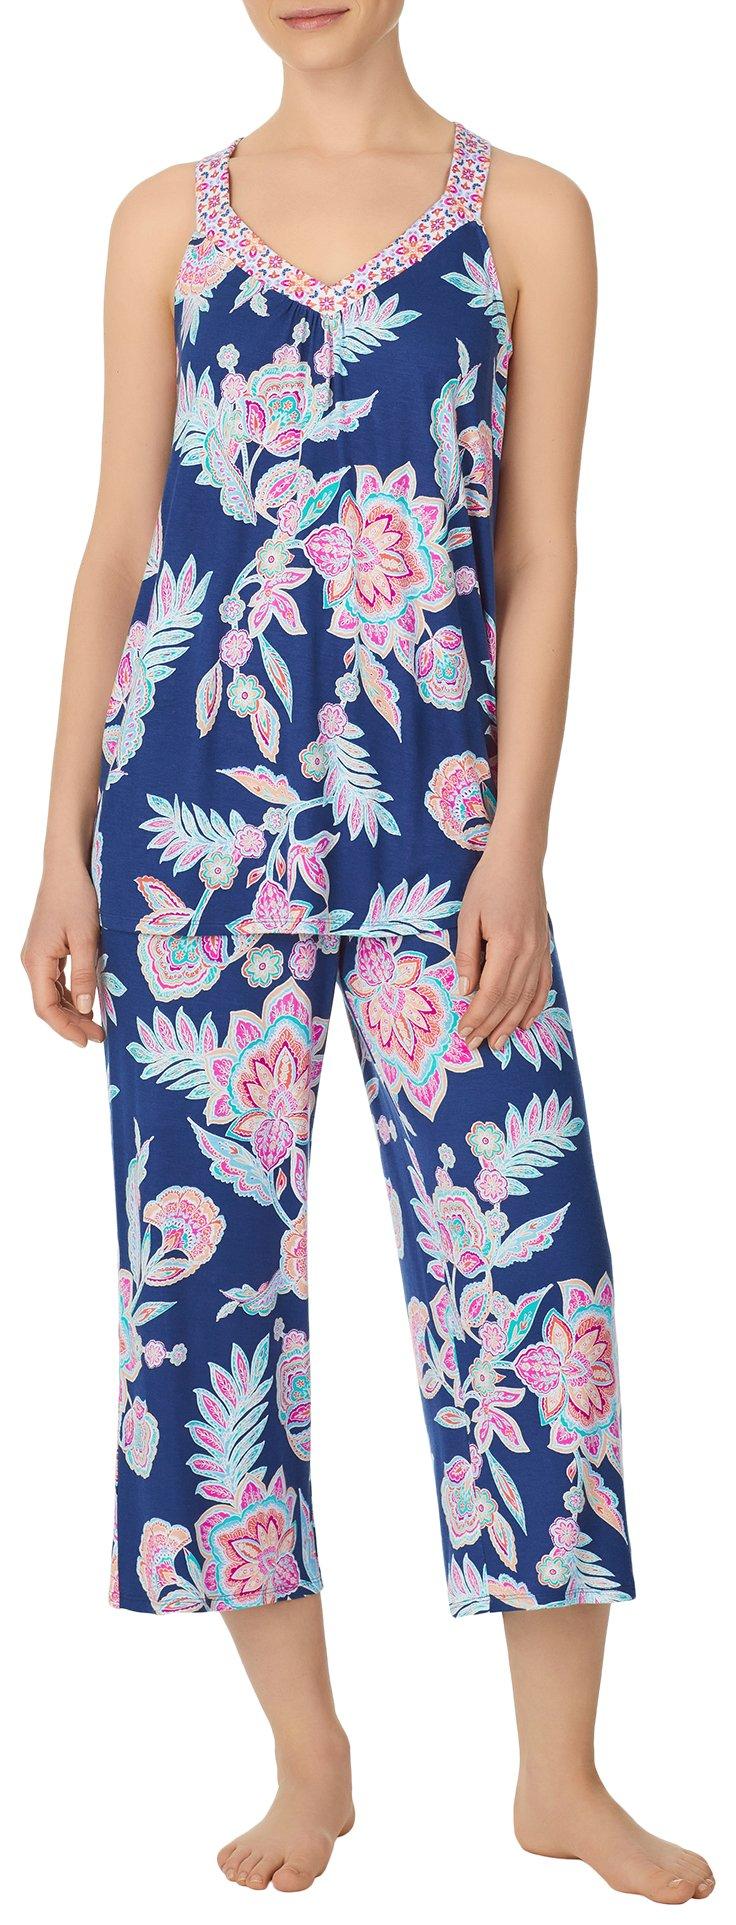 Butterfly Print Pajama Set, Casual Cami Crop Top & Elastic Waistband  Shorts, Women's Sleepwear & Loungewear